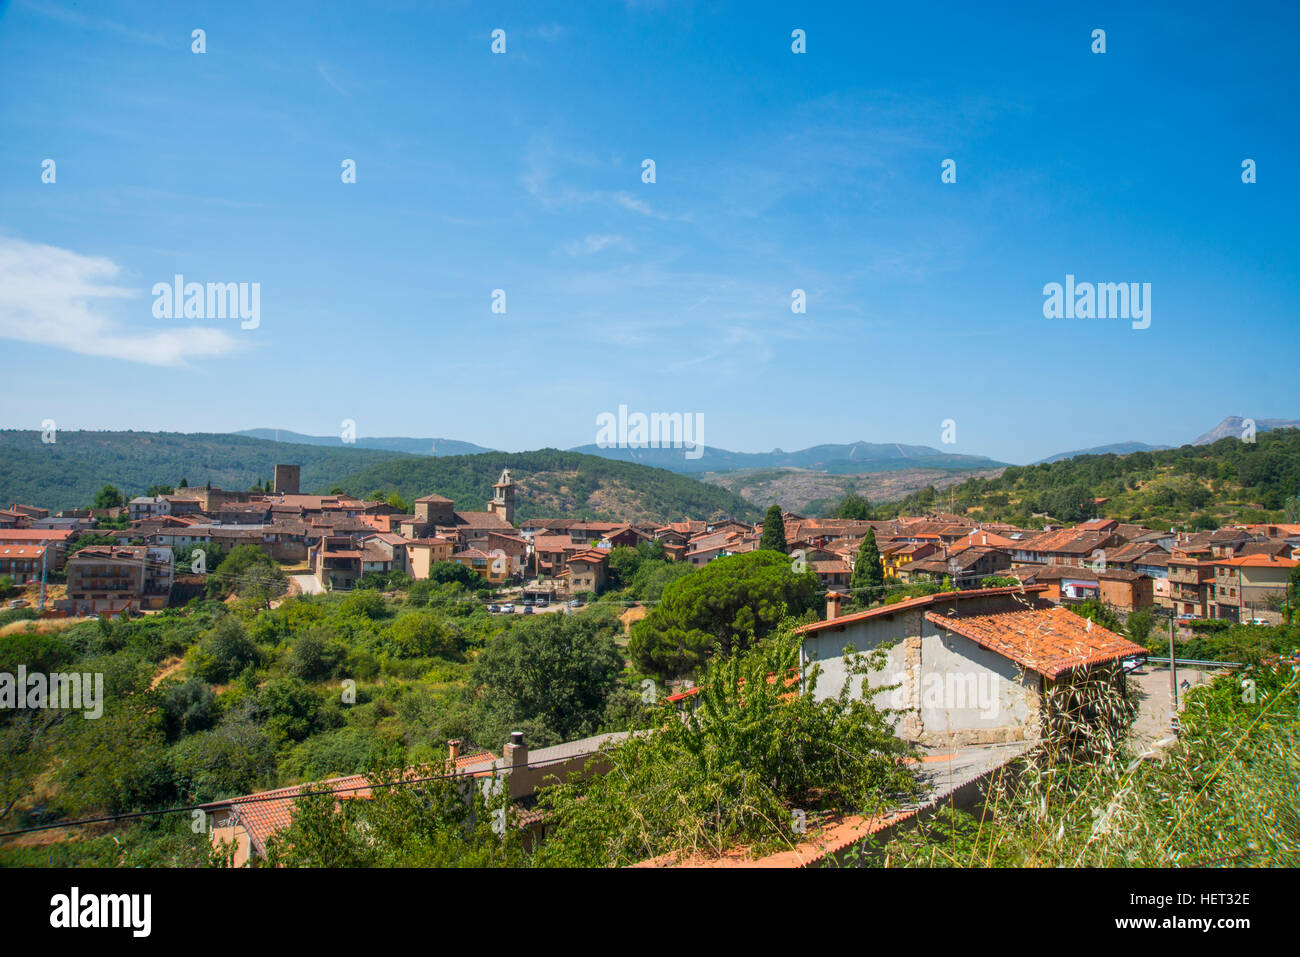 Overview of the village and landscape of Sierra de Francia. San Martin del Castañar, Salamanca province, Castilla Leon, Spain. Stock Photo